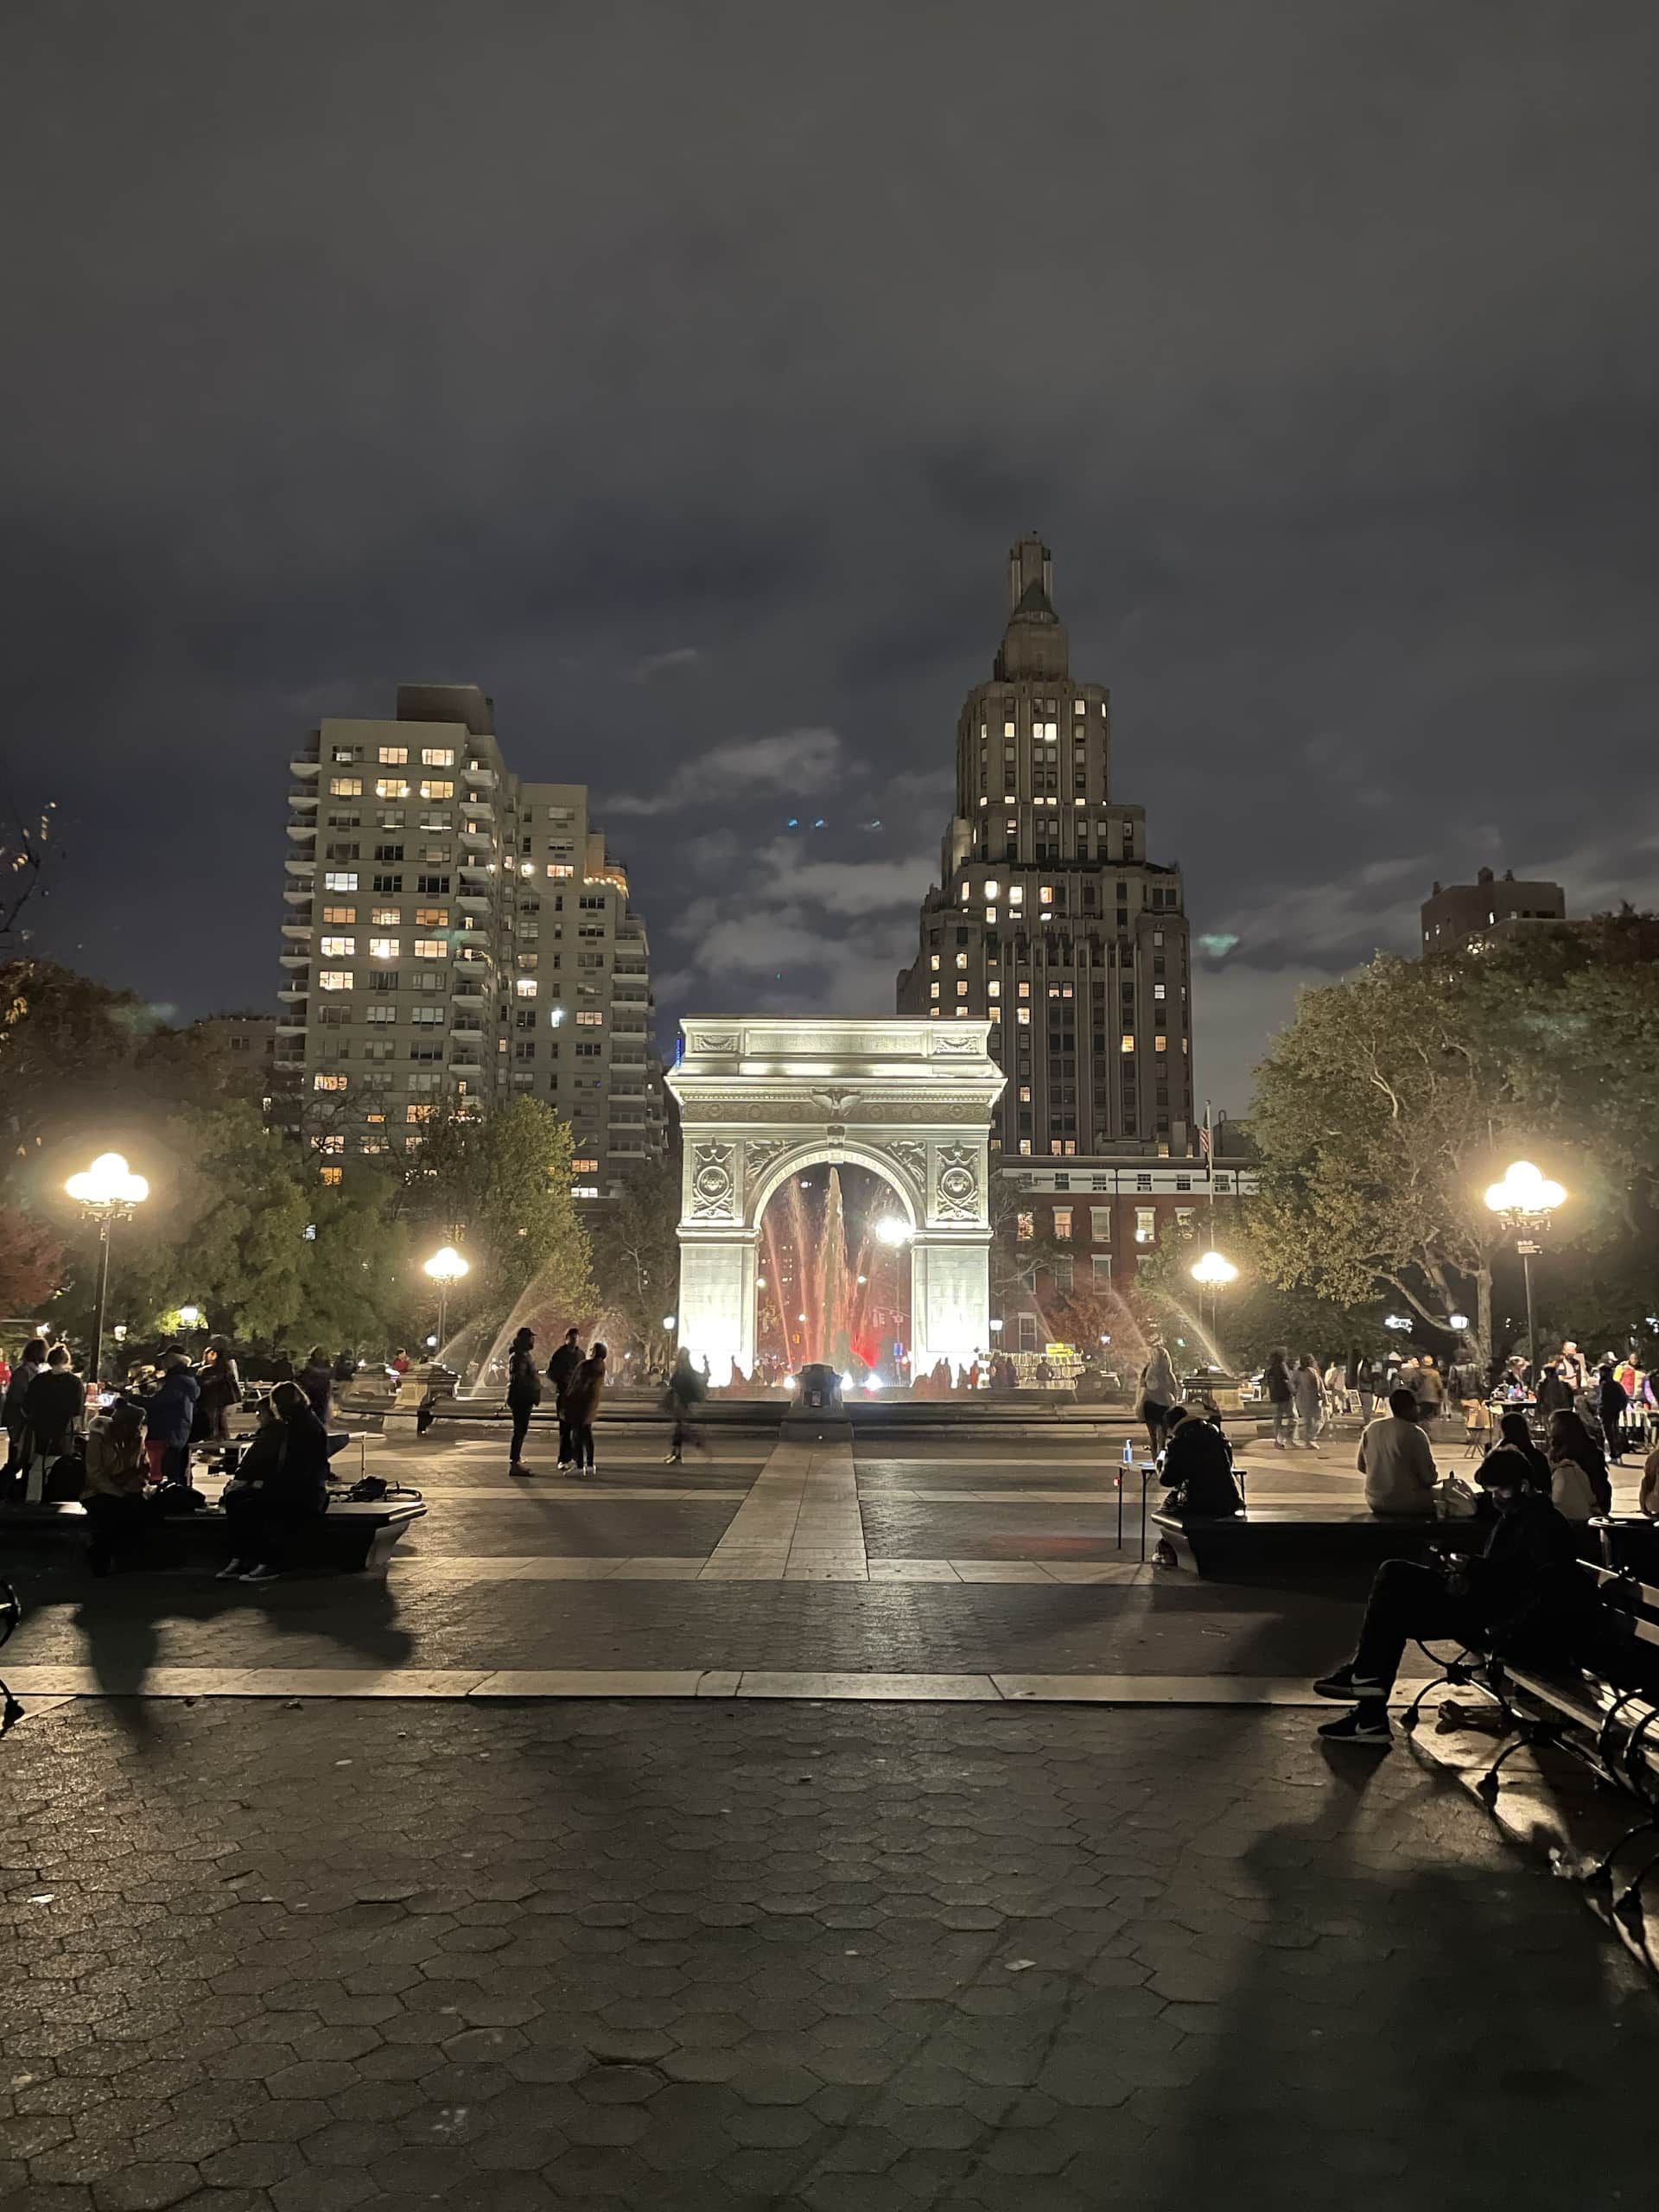 Washington Square Park in New York City at night